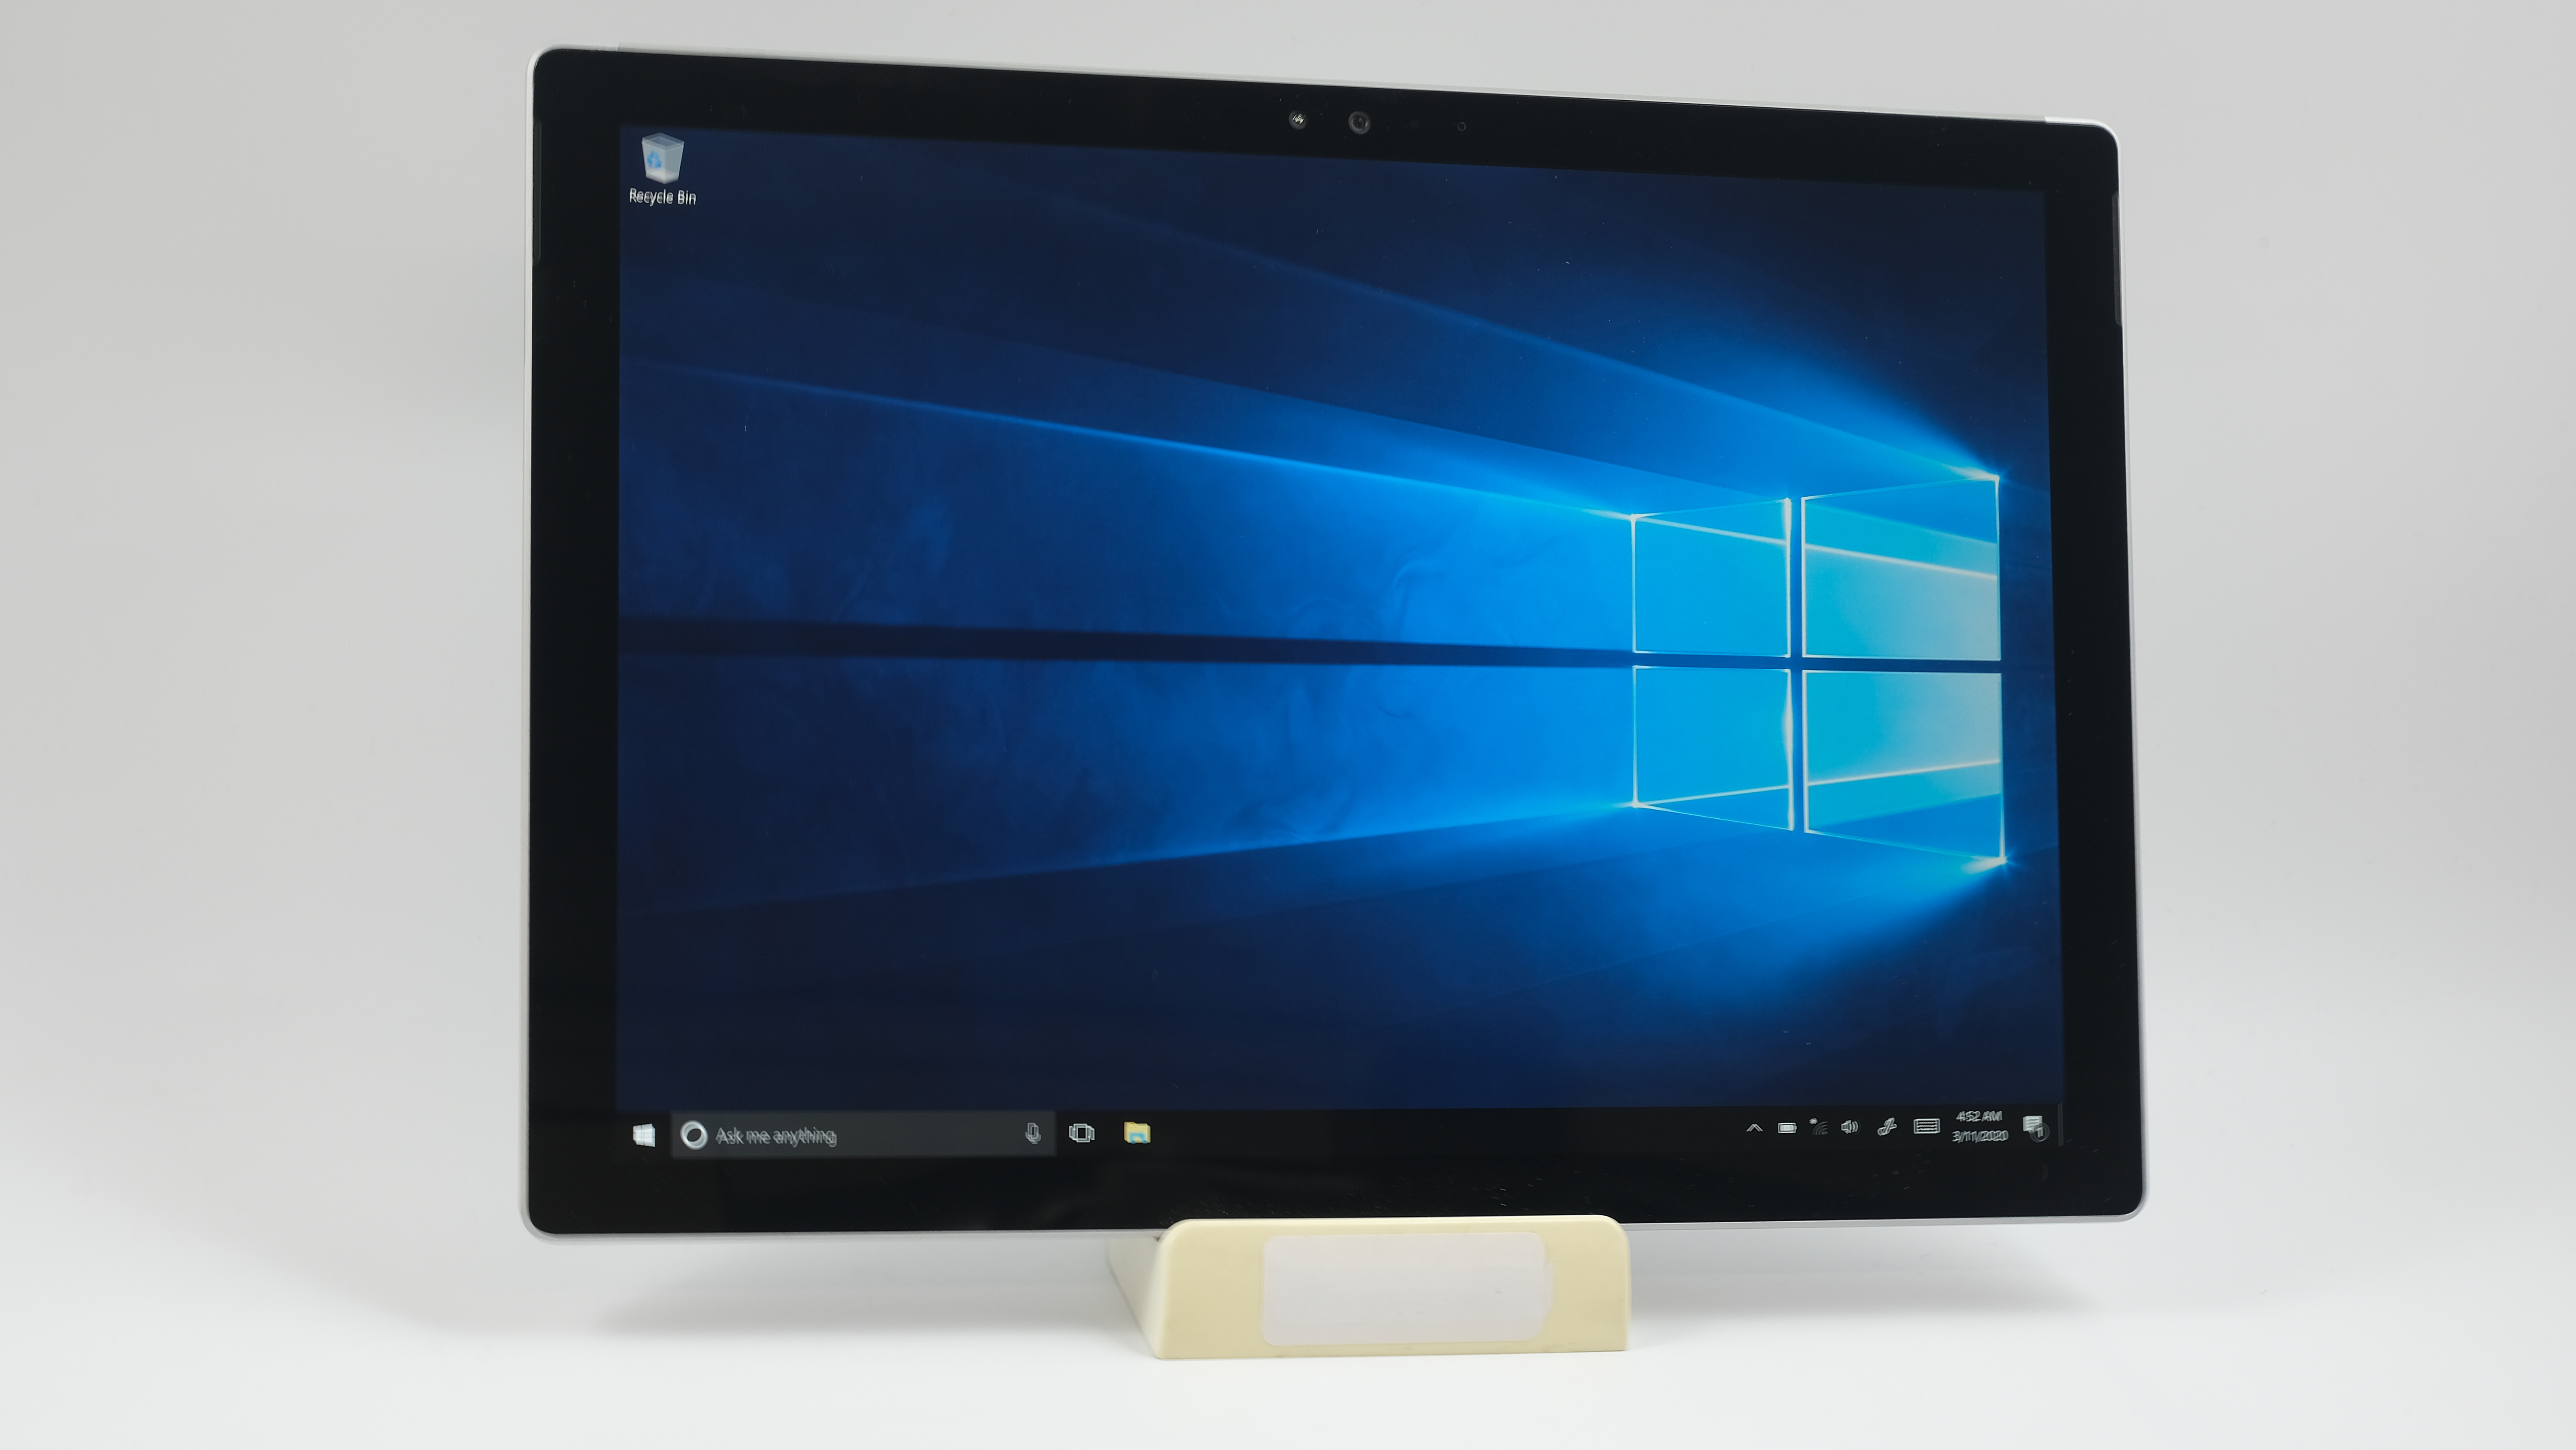 Microsoft Surface Pro 5 1796 I7-7660U 2.50GHz 8GB RAM 256GB SSD READ